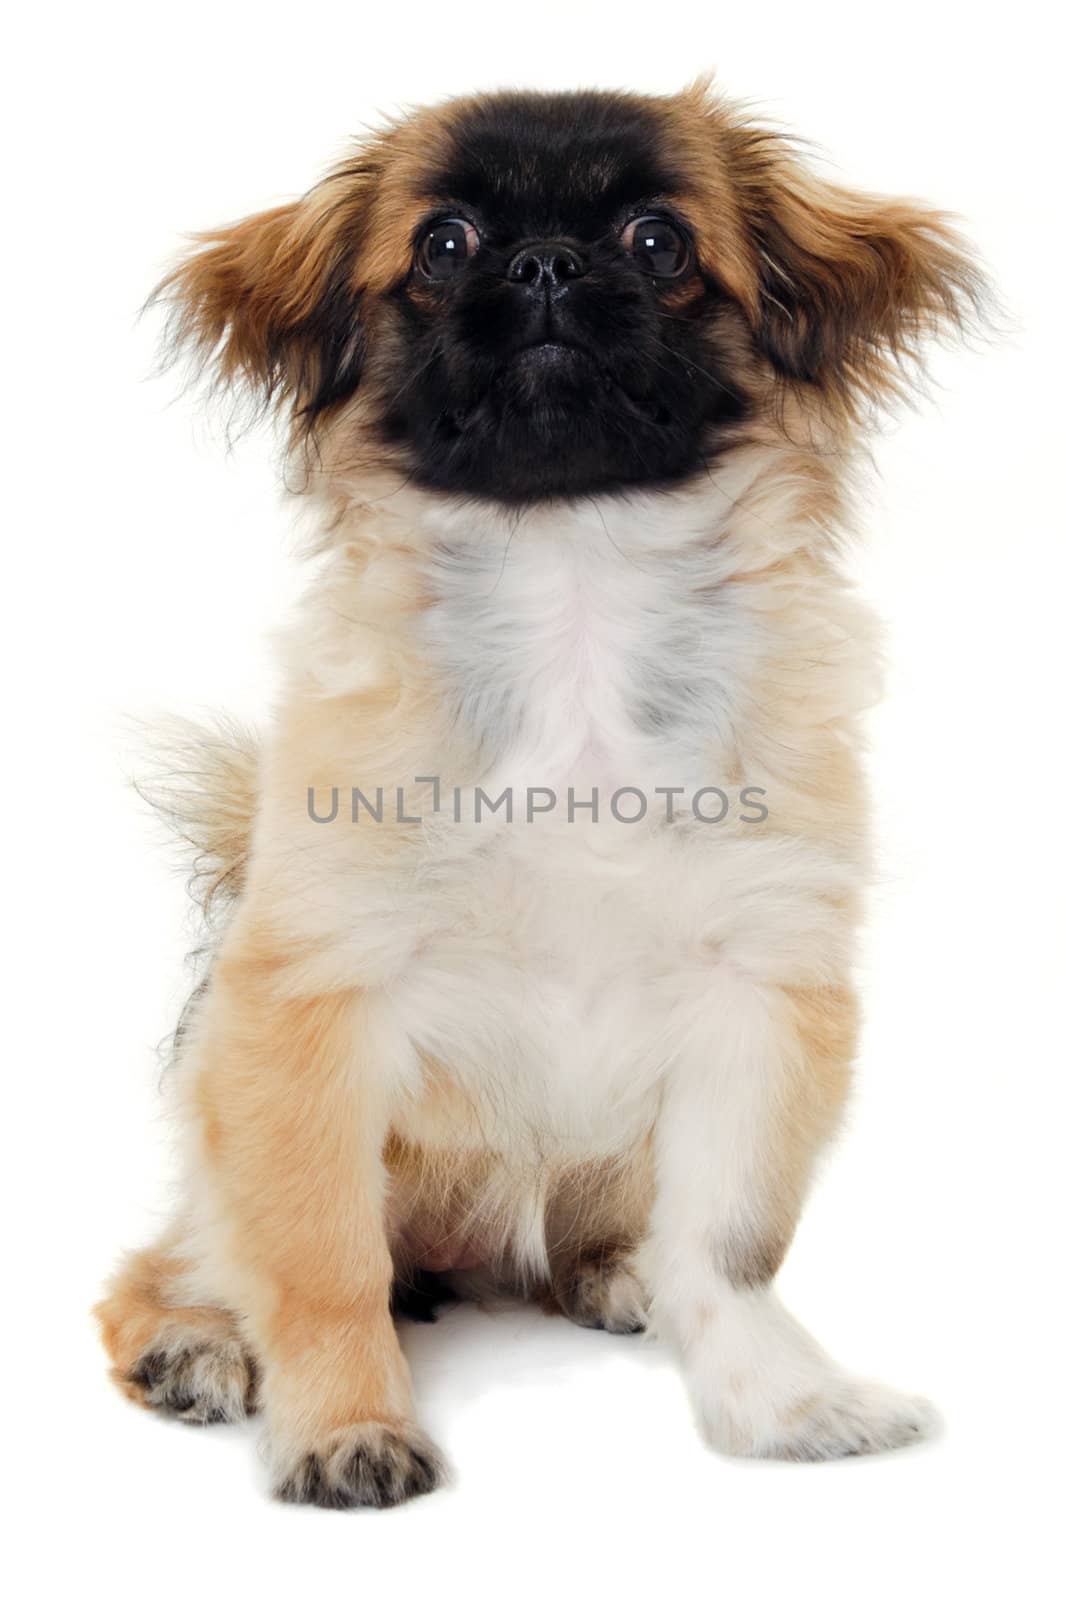 Puppy dog sitting on white background by cfoto